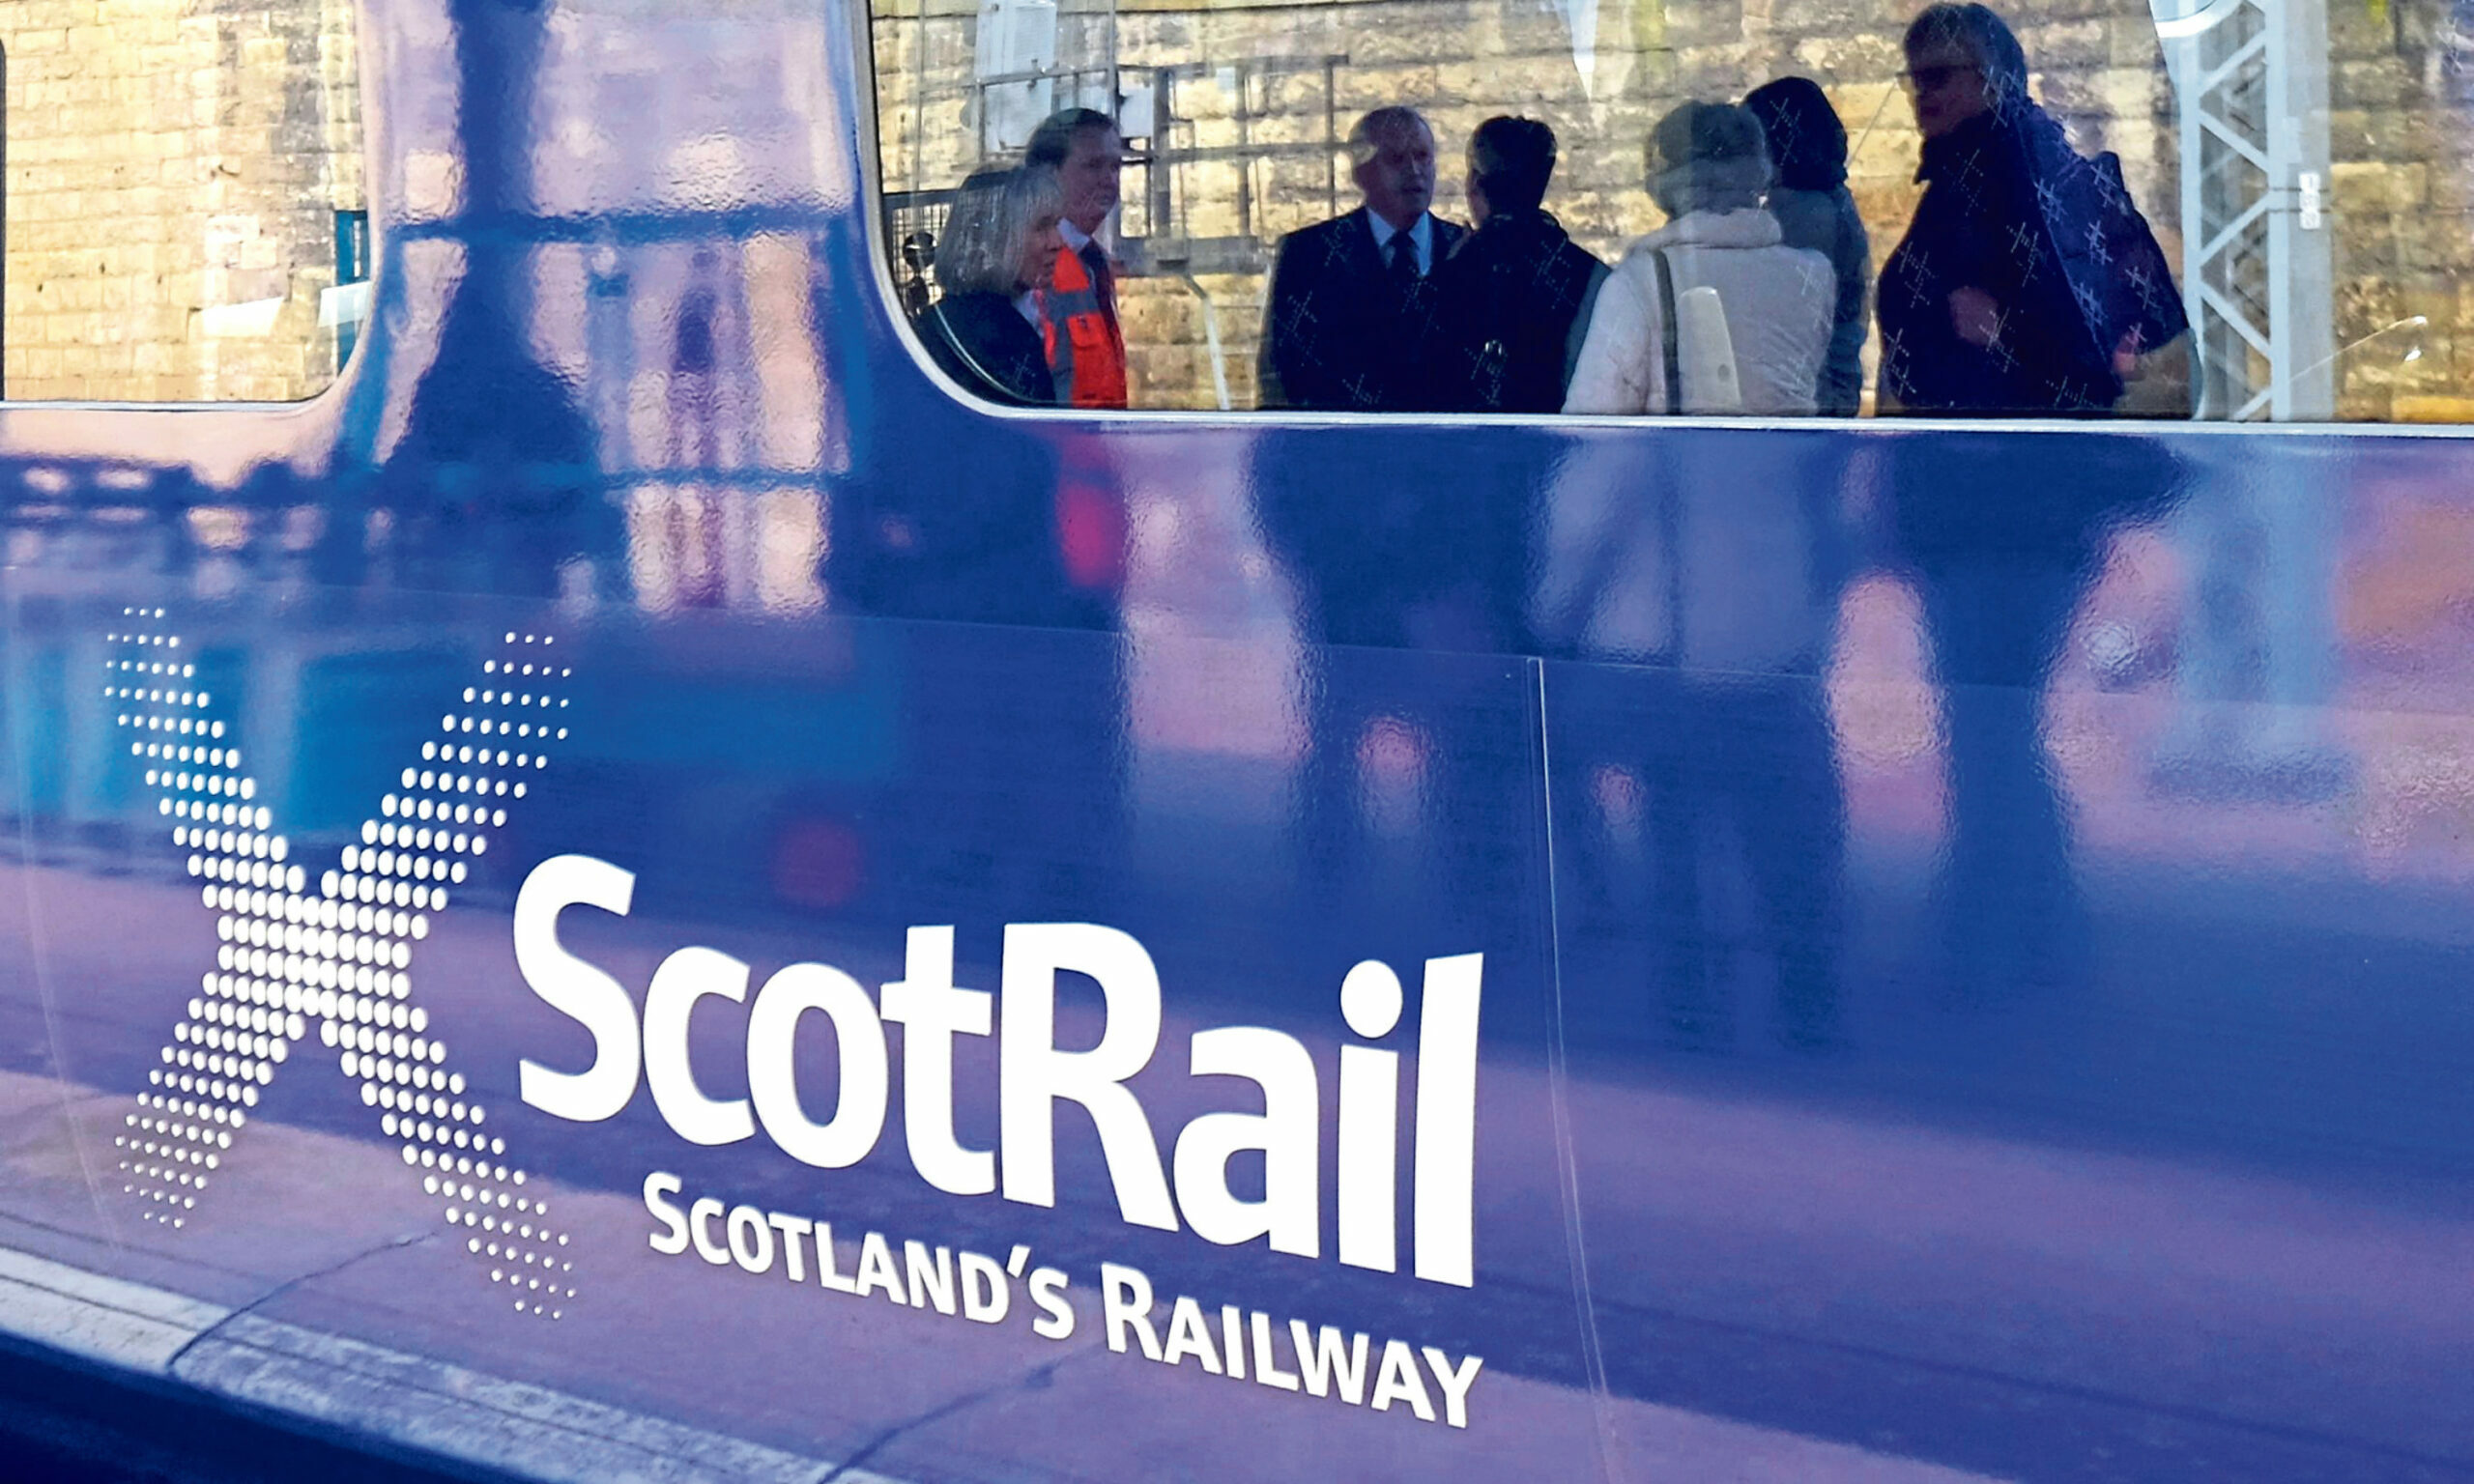 scotrail journey check